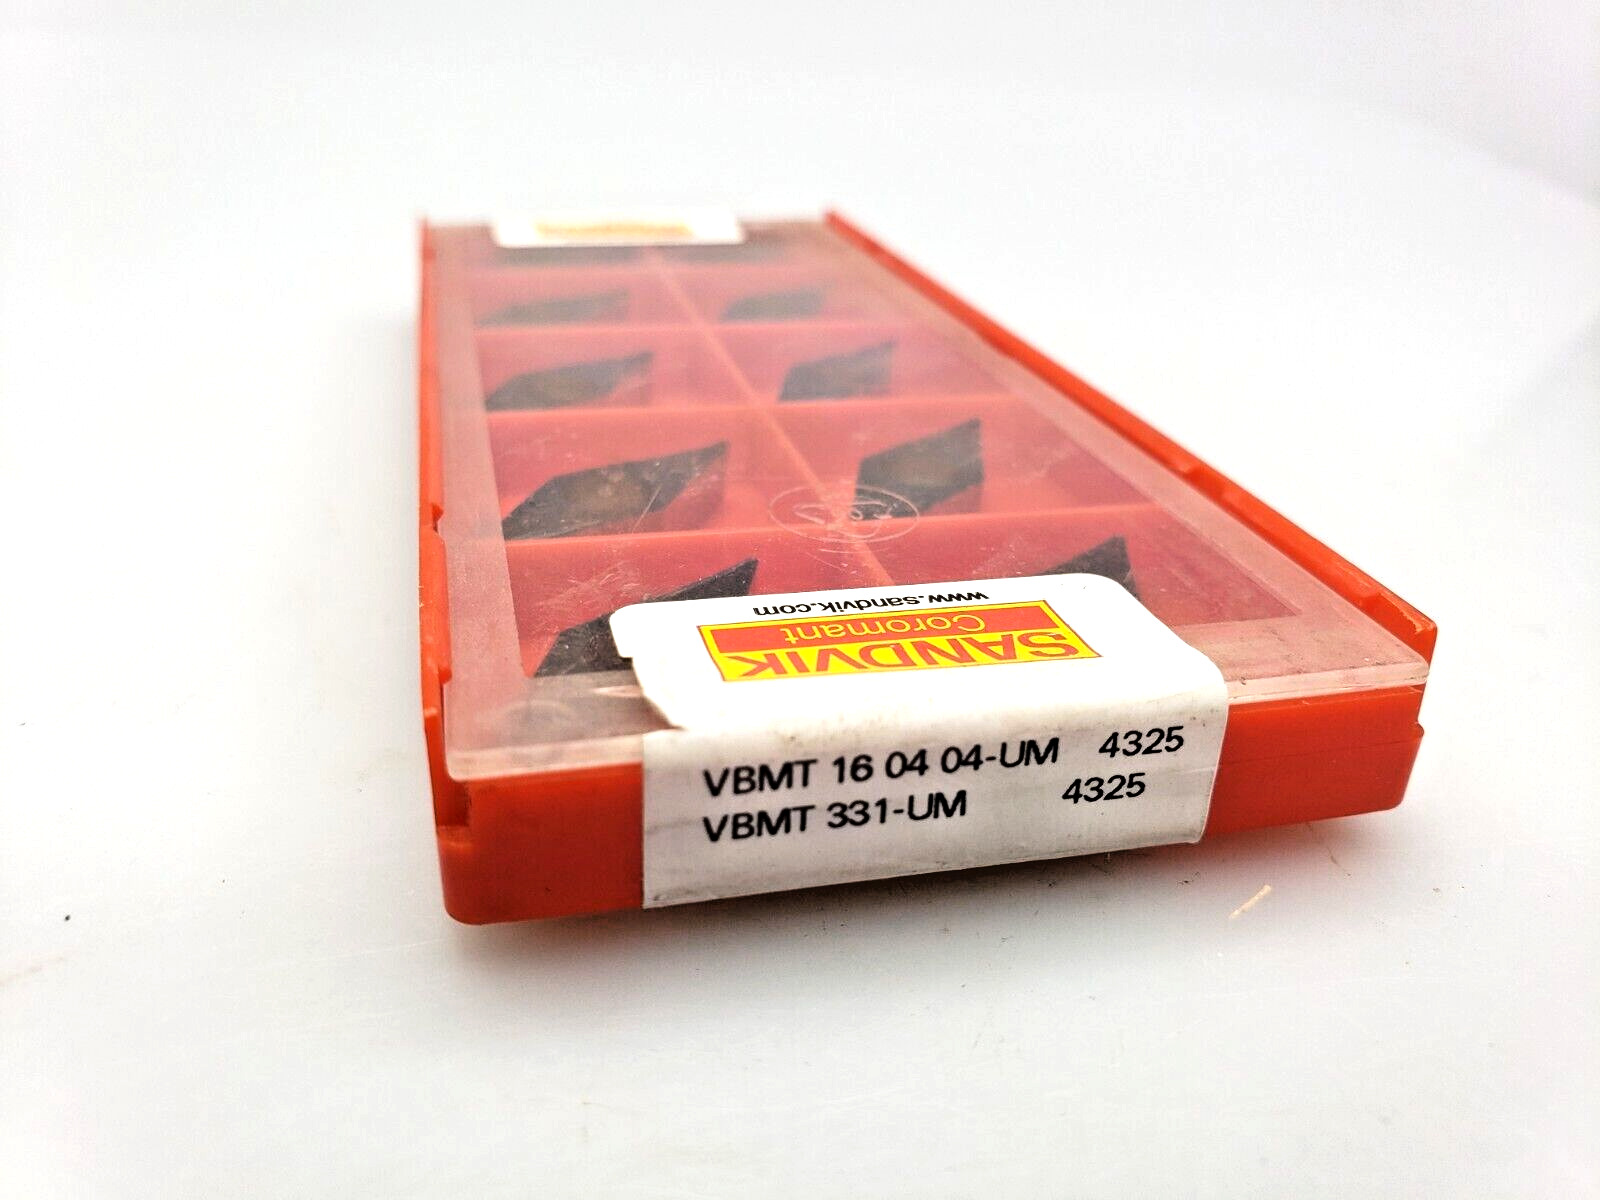 Sandvik Coromant VBMT 331-UM 4325 (VBMT 16 04 04-UM) Carbide Inserts (Box of 10)